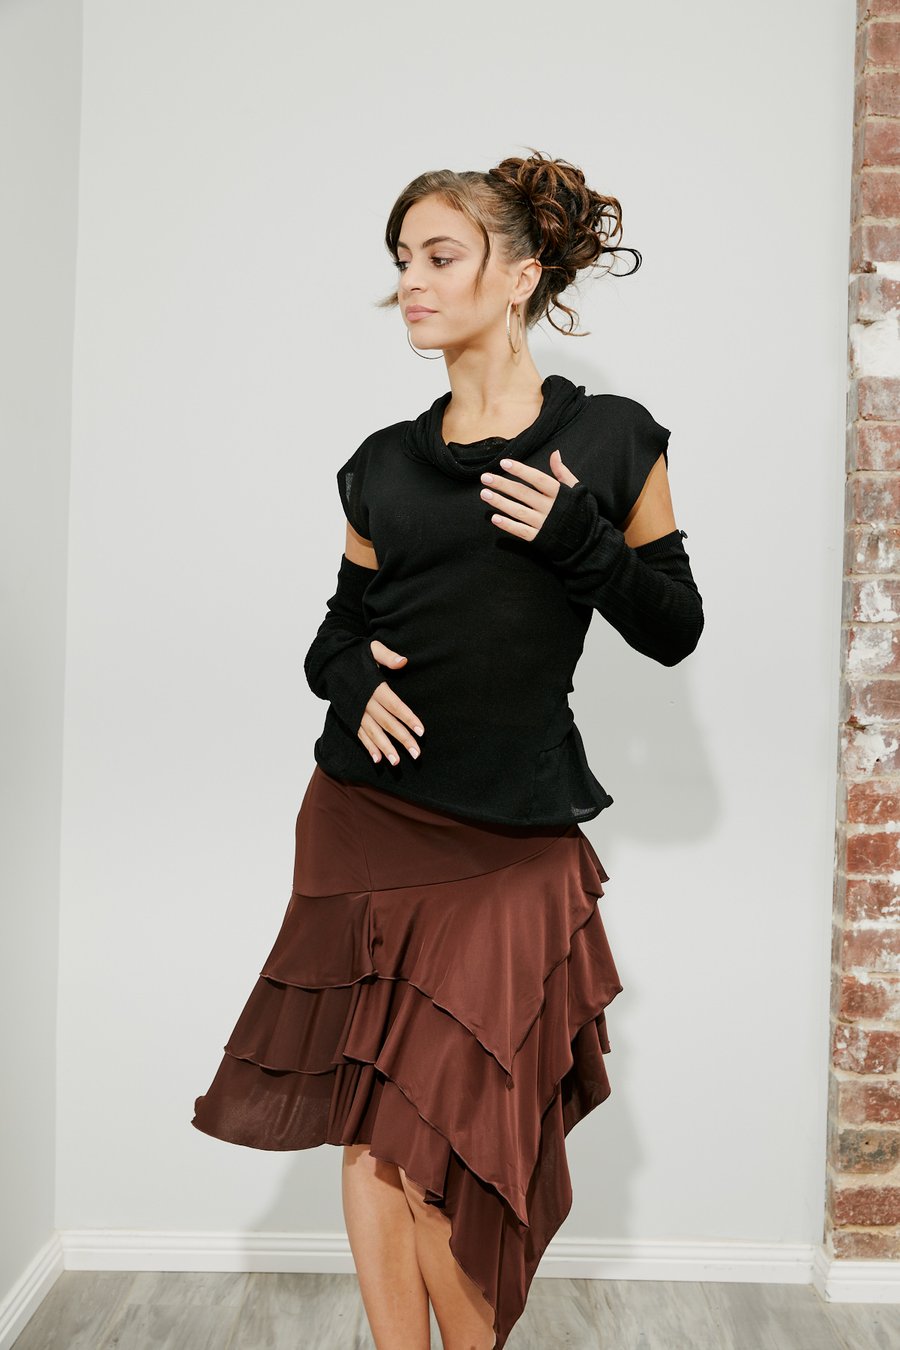 Image of J1810S Latin Flamenco Skirt CHOCO Dancewear latin ballroom